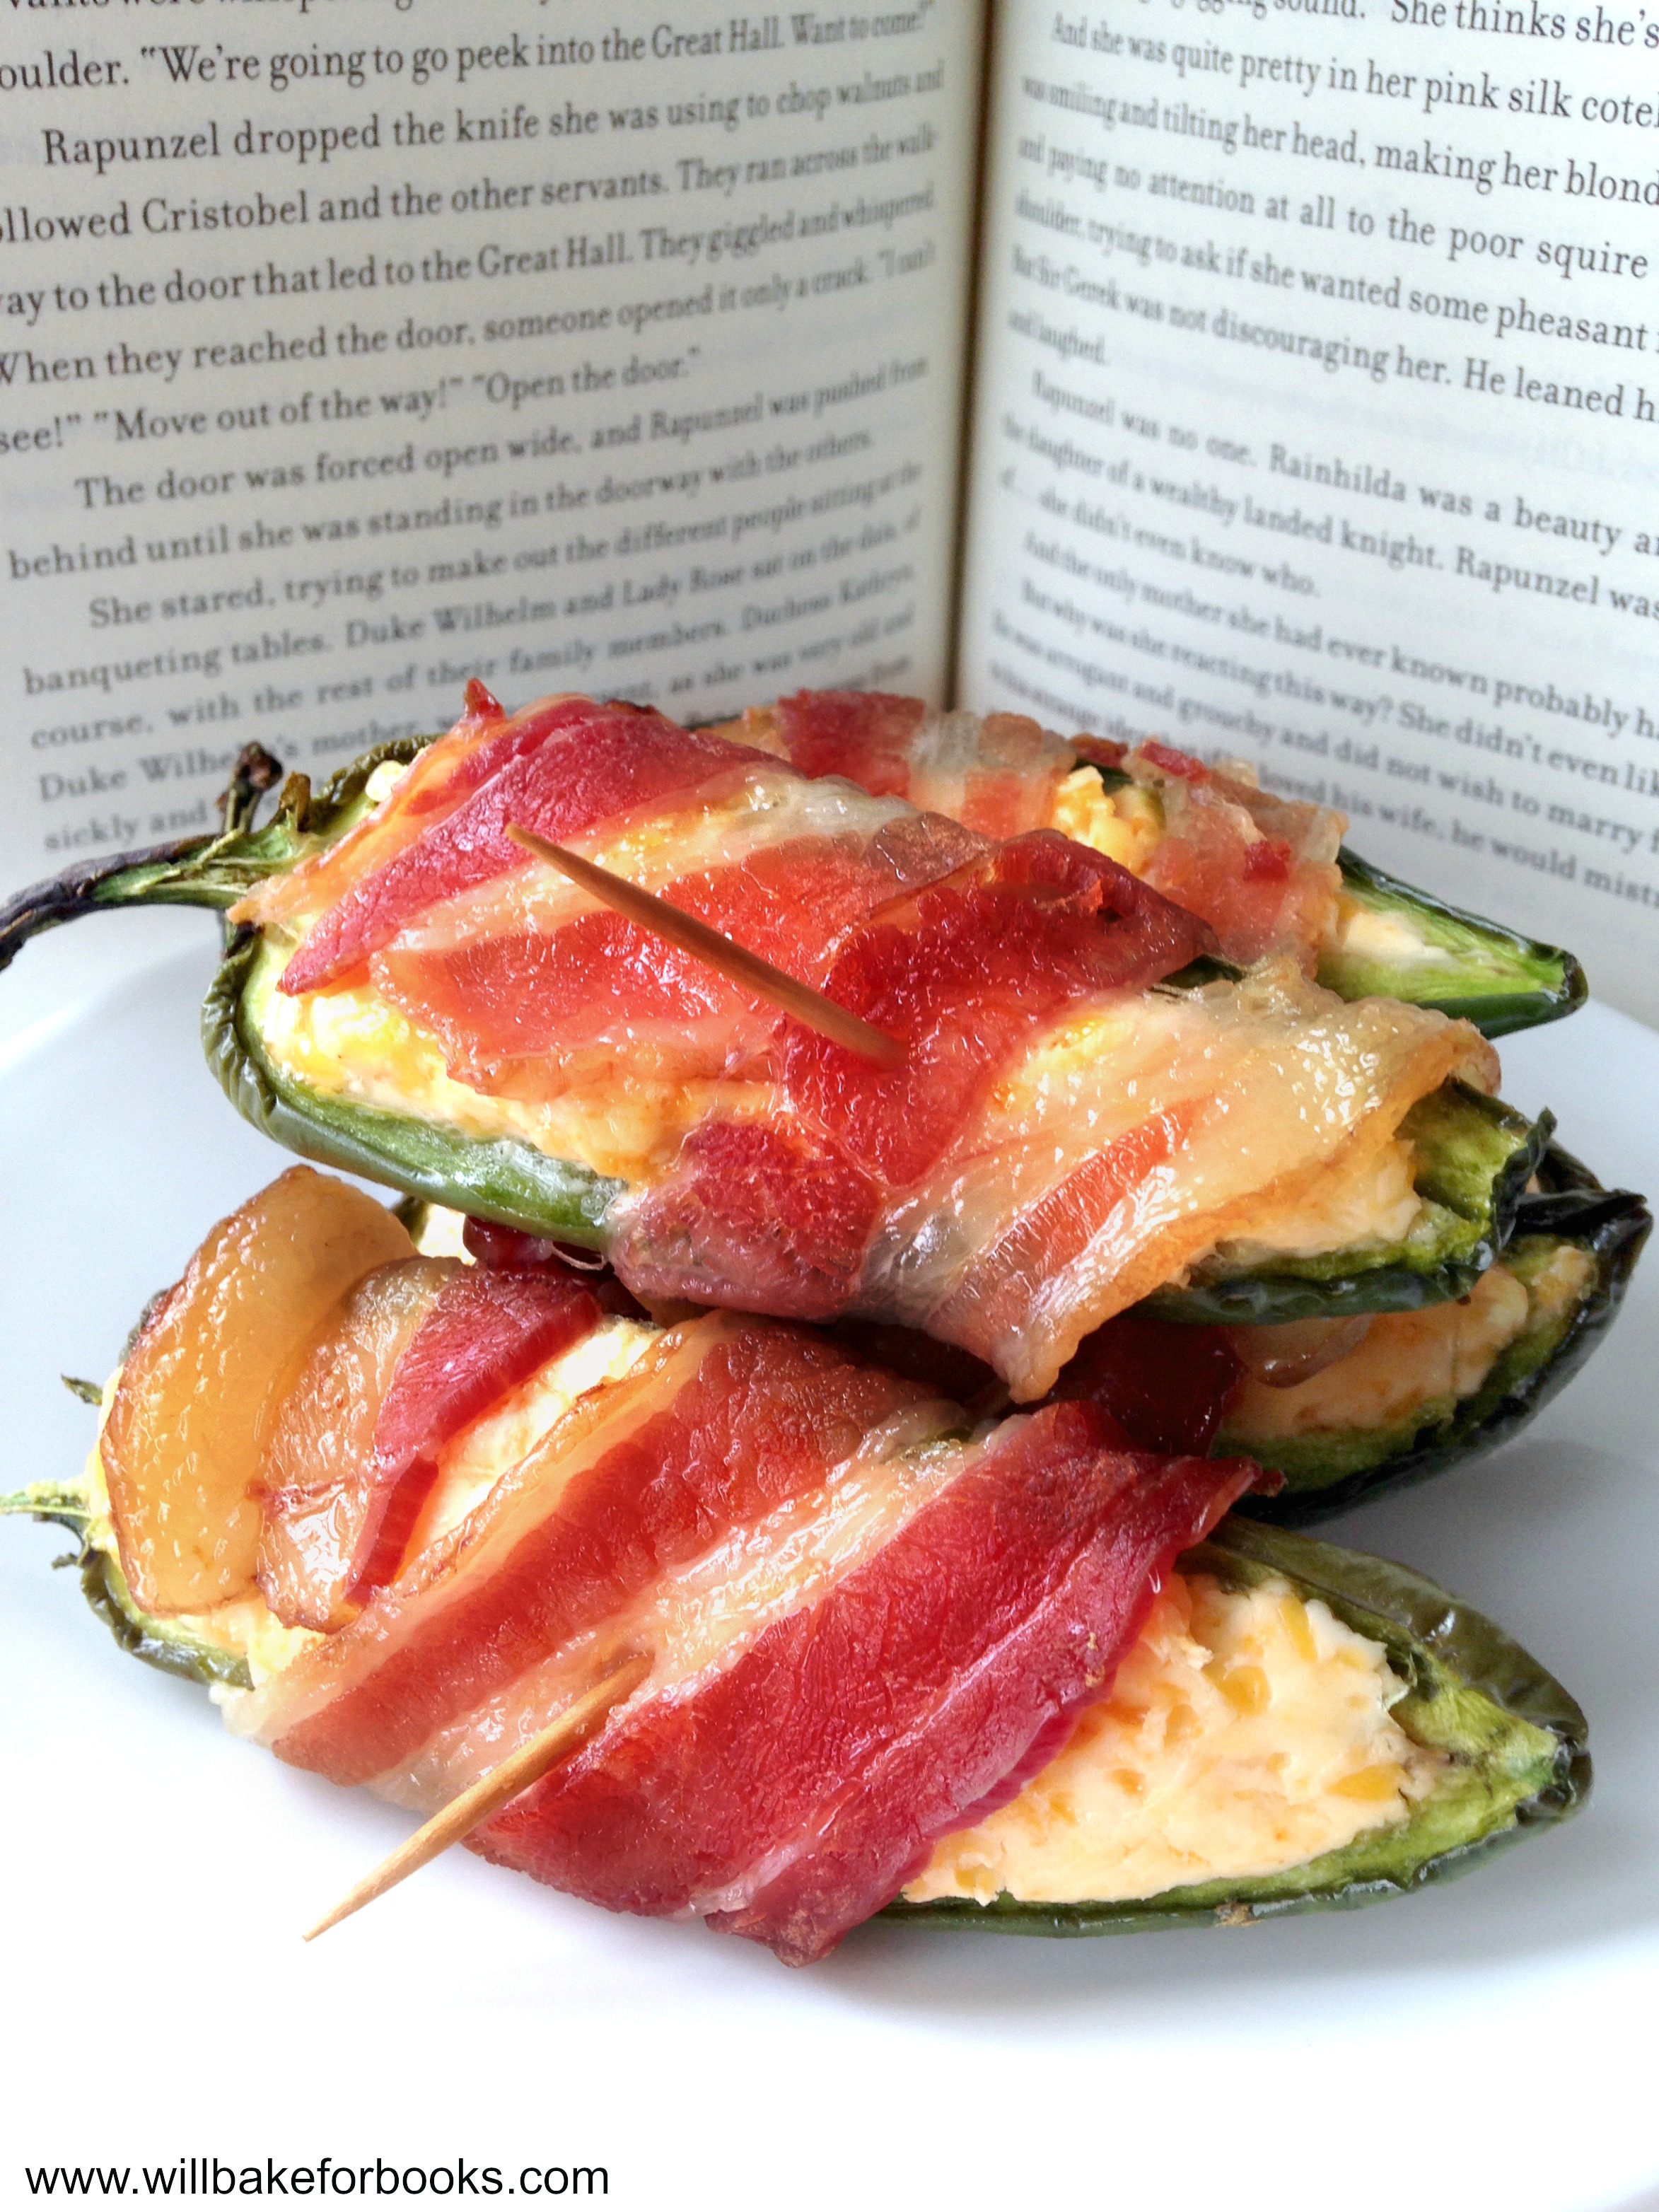 Baked Bacon-Wrapped Jalapeño Poppers | Recipe on willbakeforbooks.com!